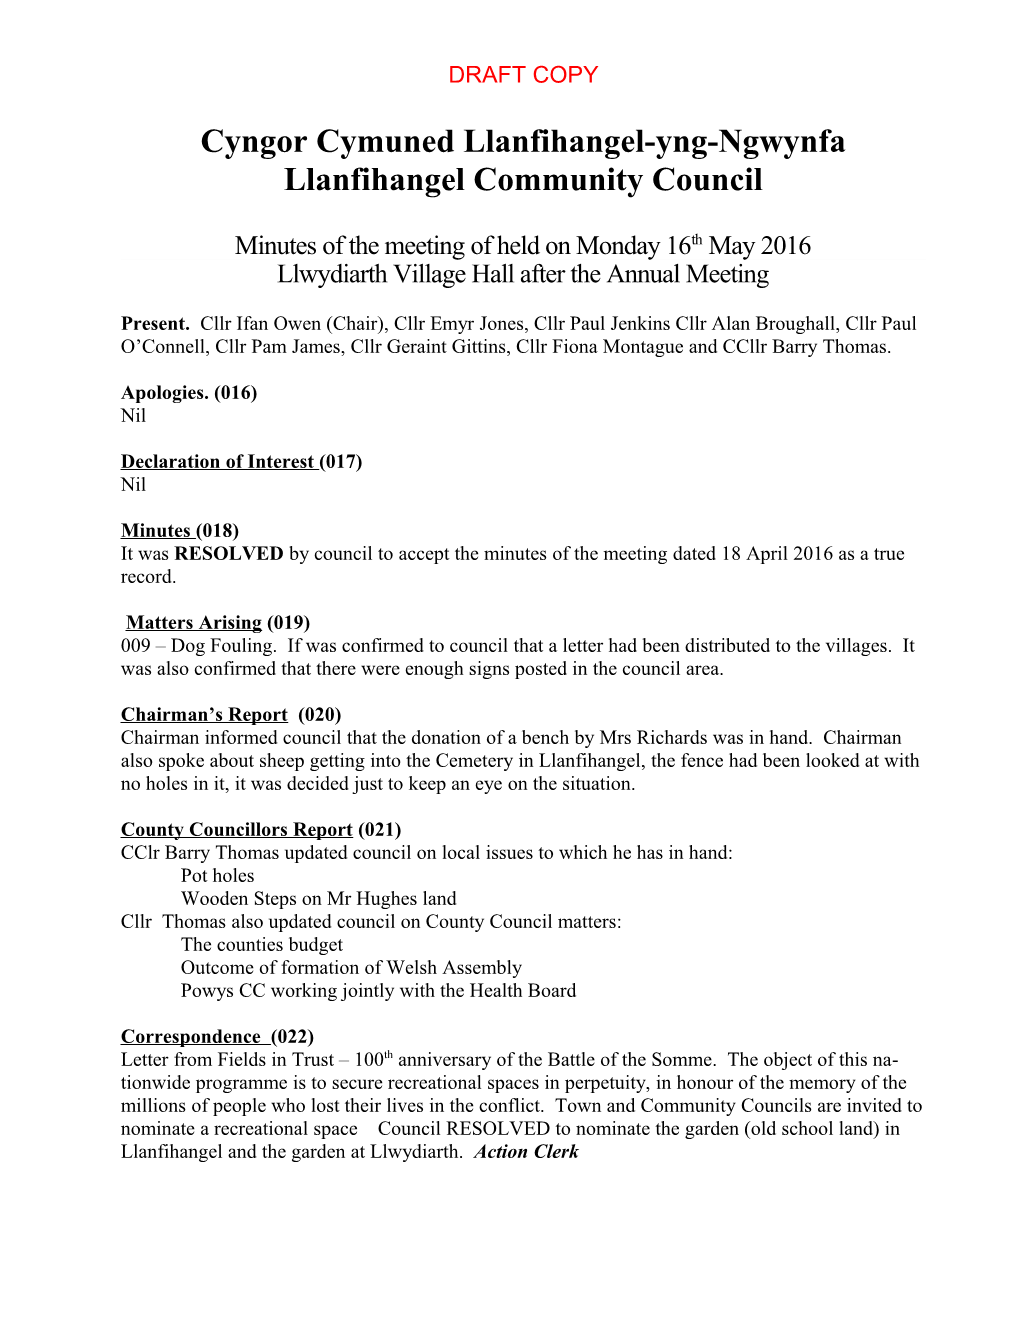 Llanfihangel Community Council